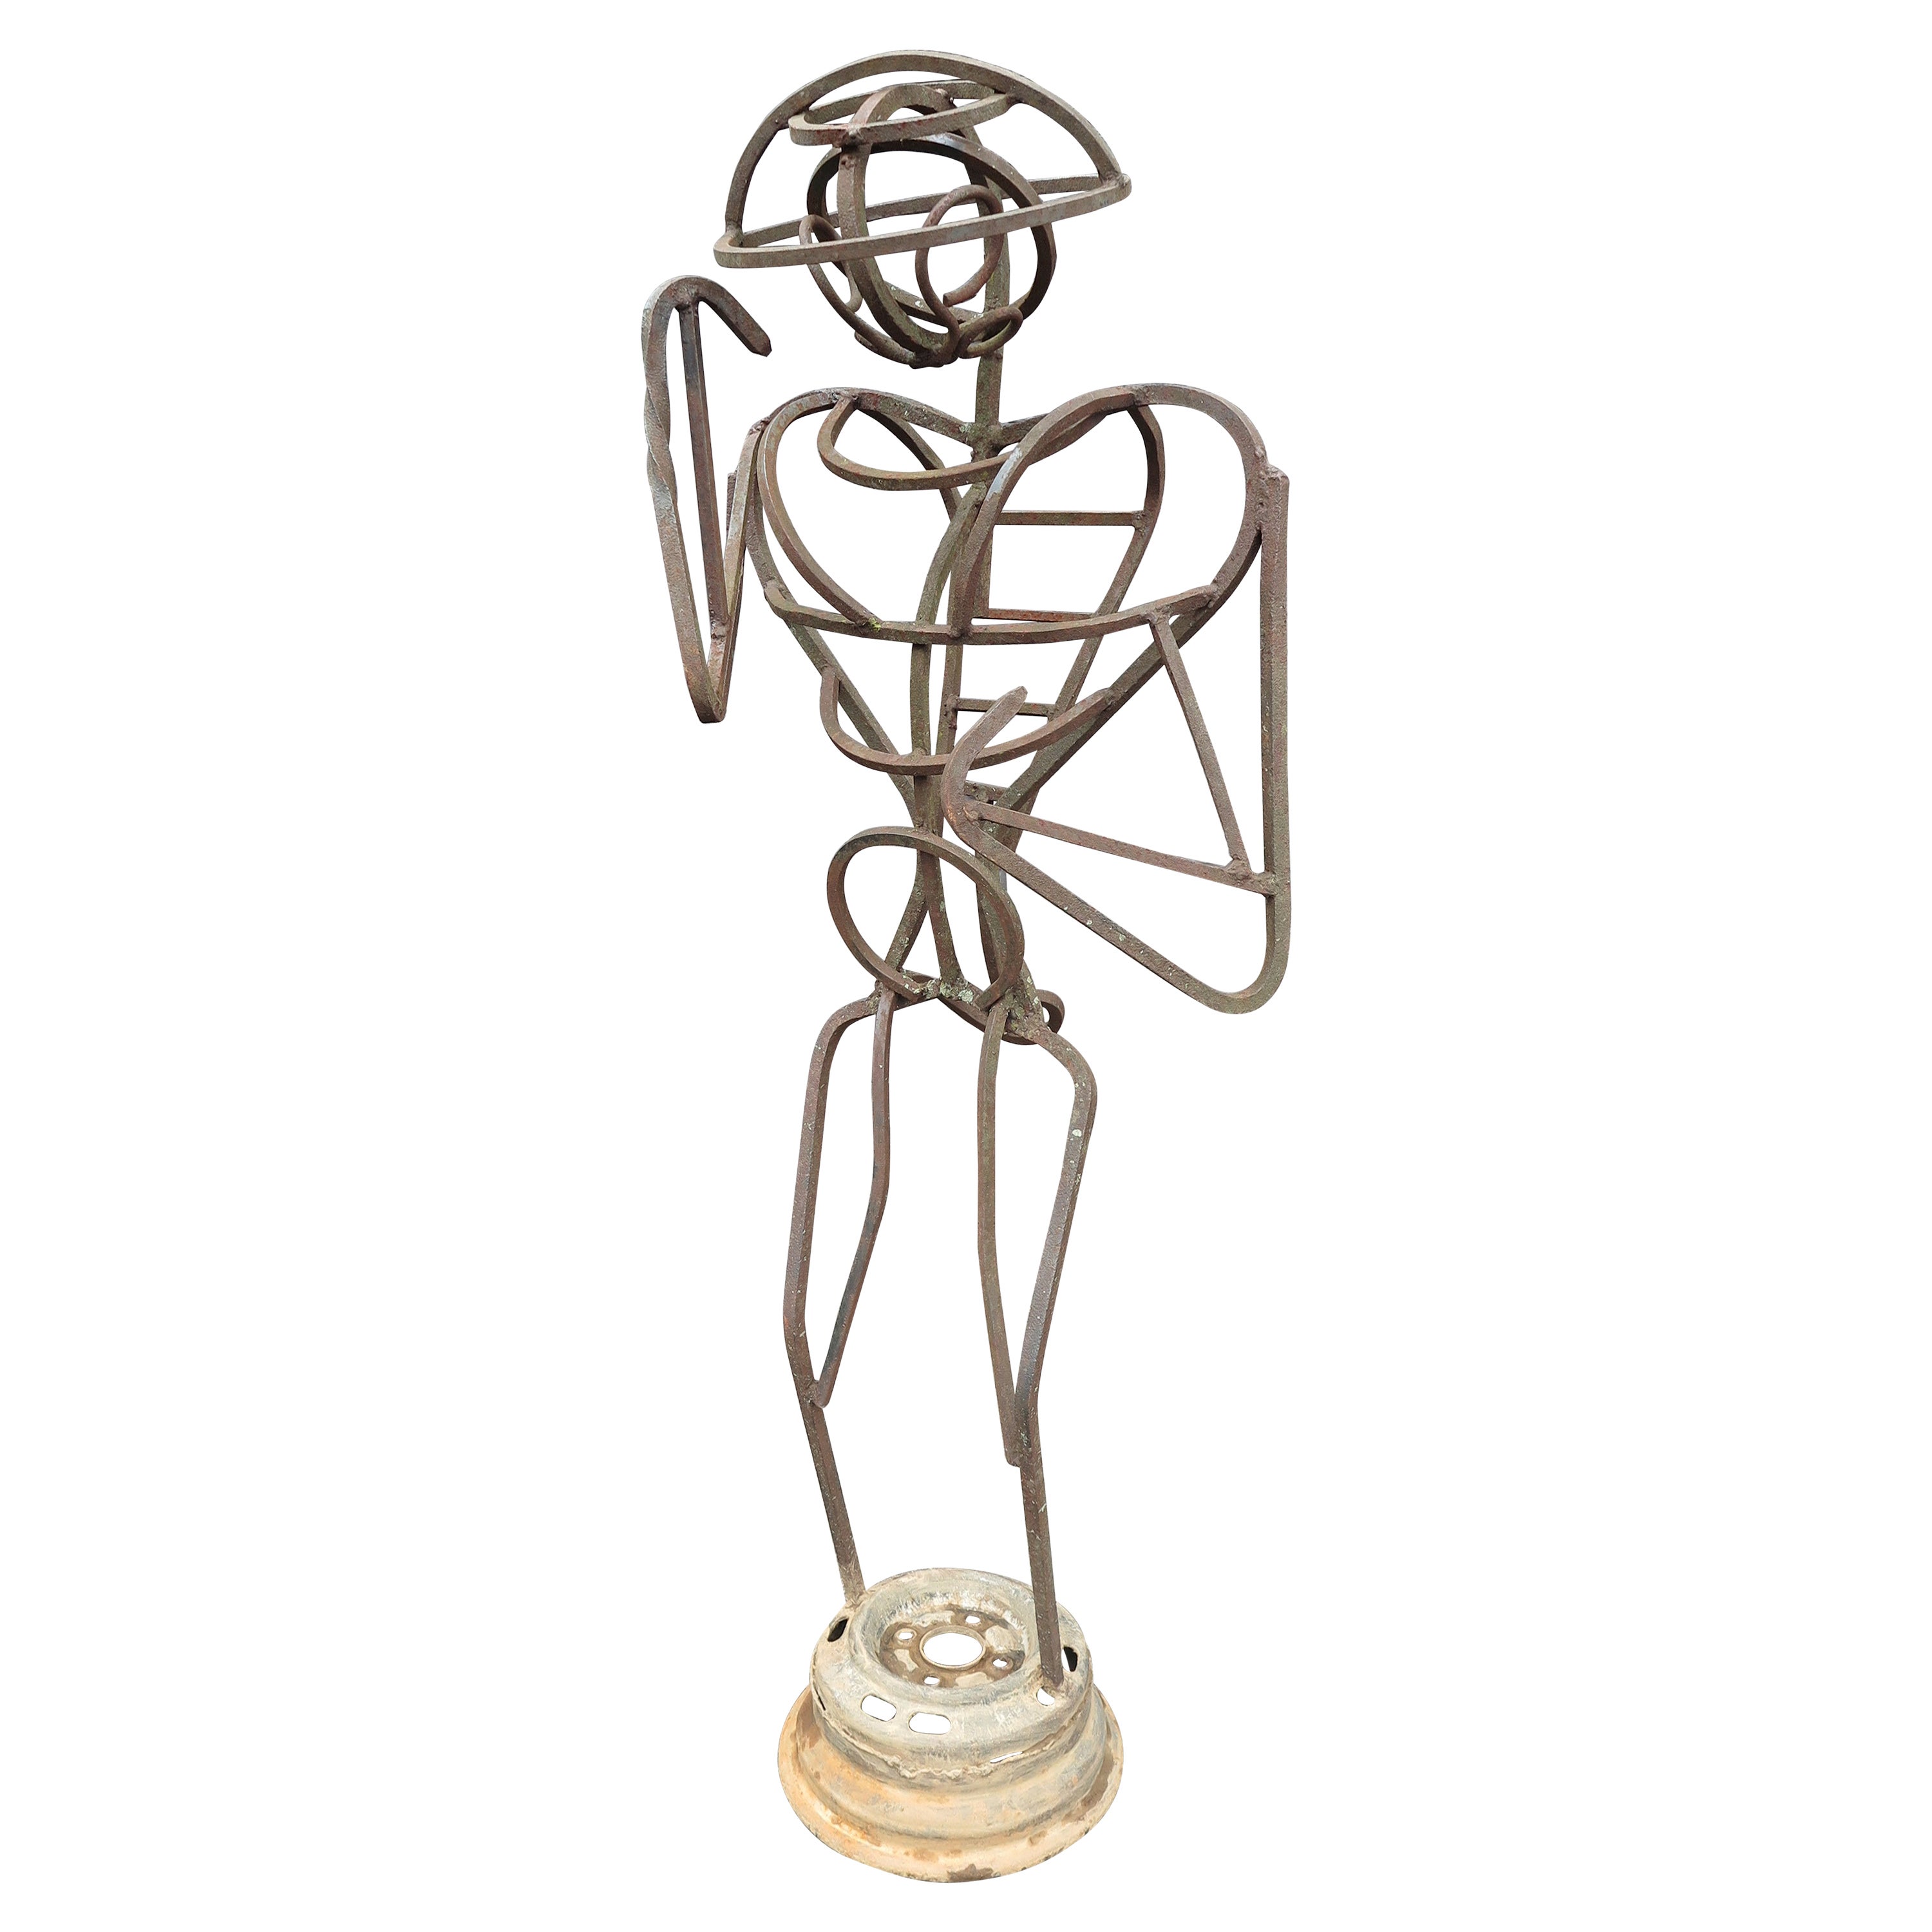 A.R. Gately Metal Sculpture "Bee Keeper"